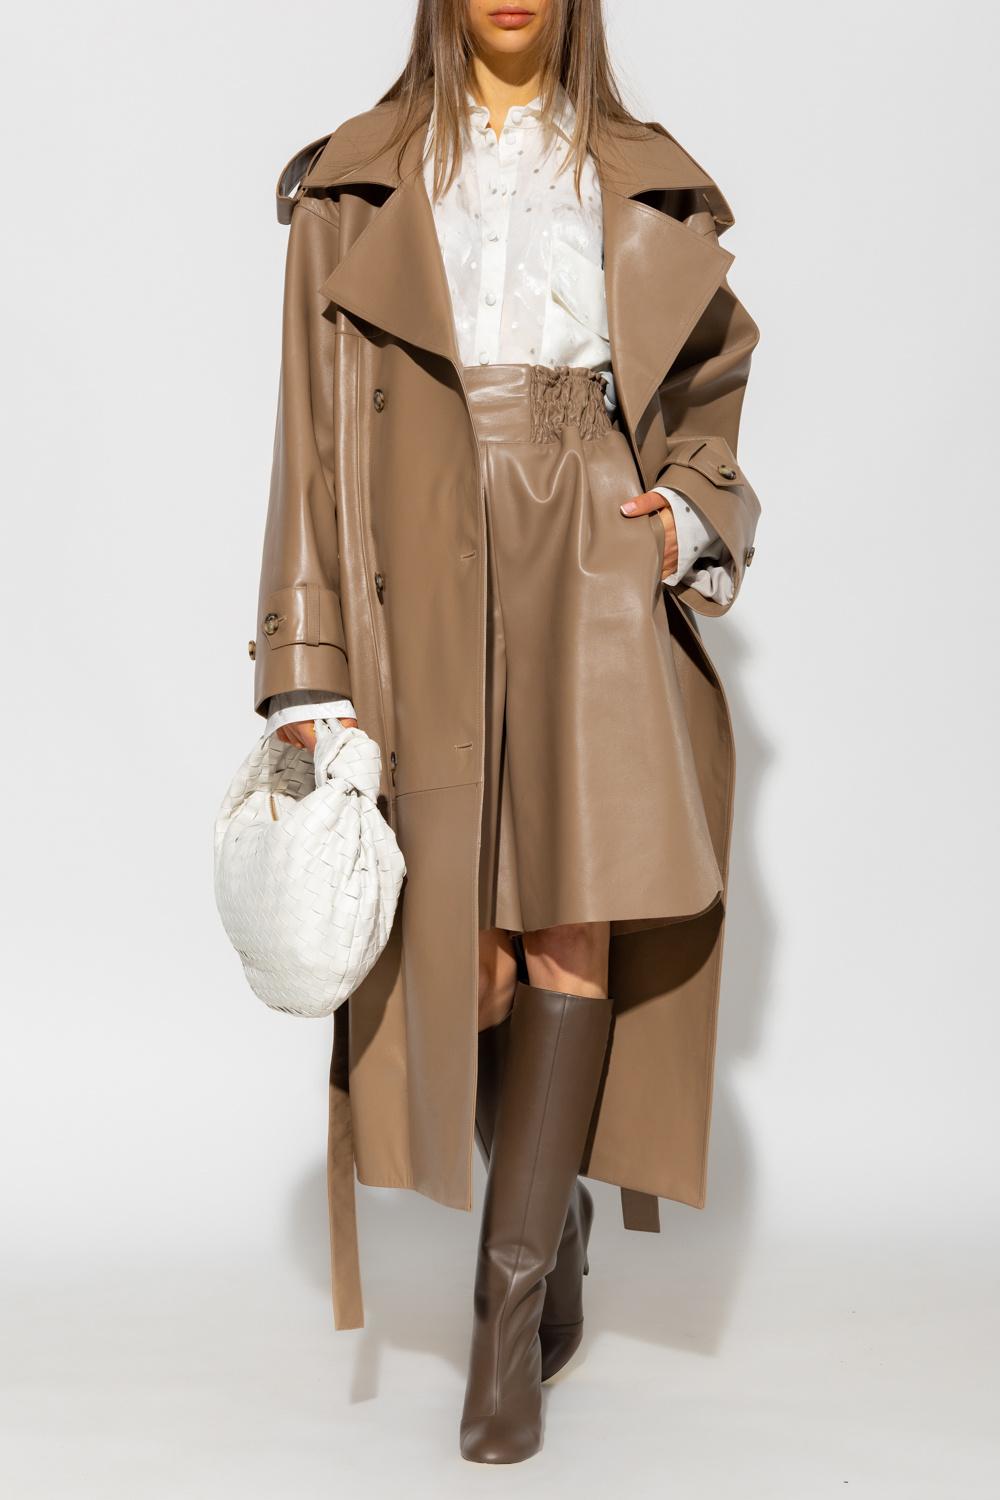 The Mannei ‘Amman’ leather coat